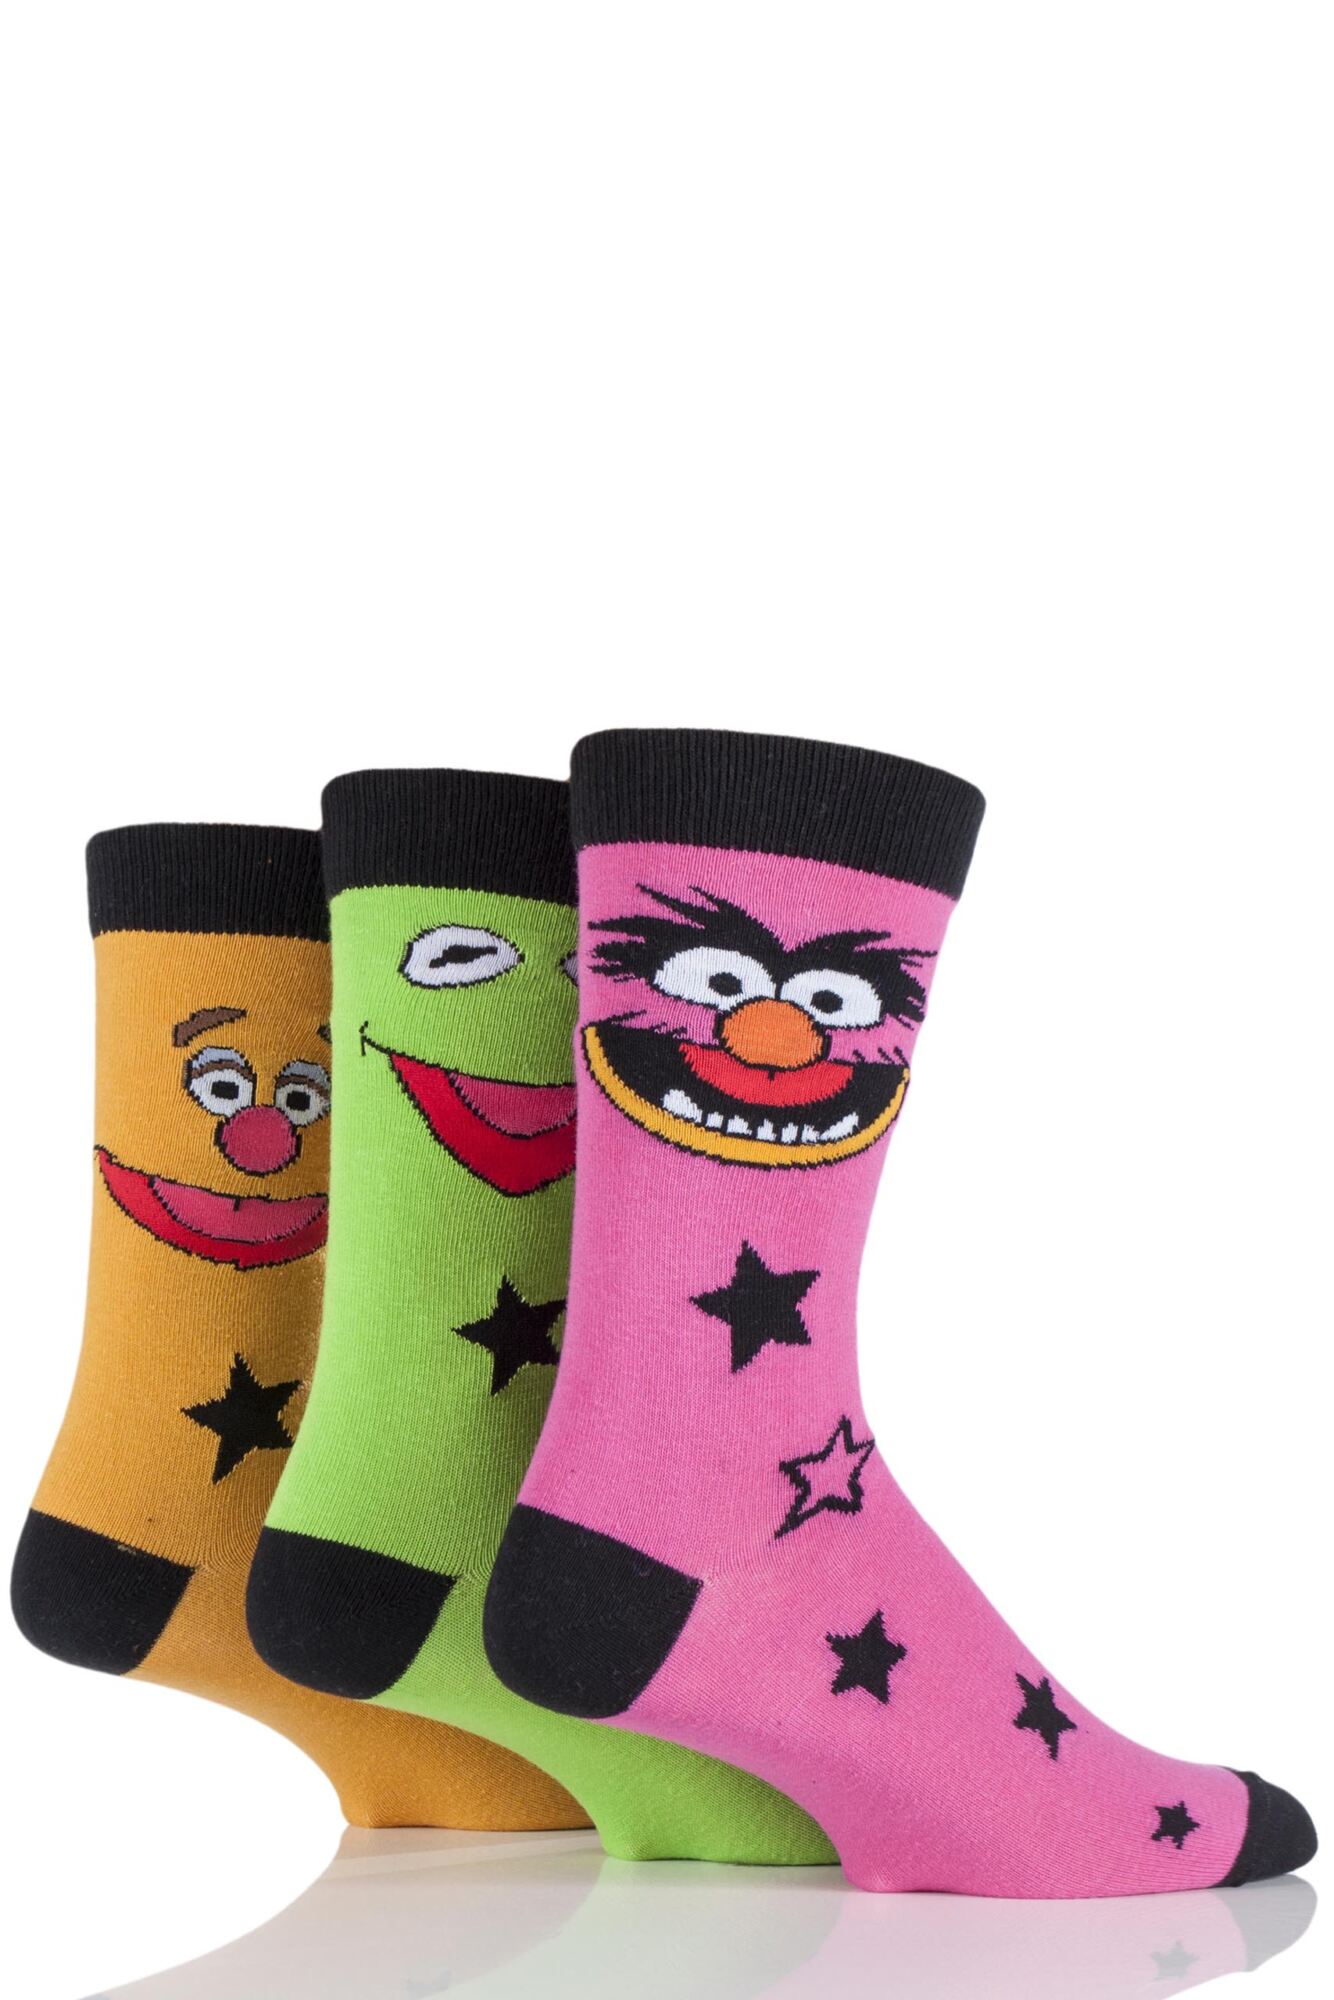 3 Pair Muppets Socks Men's - Film & TV Characters